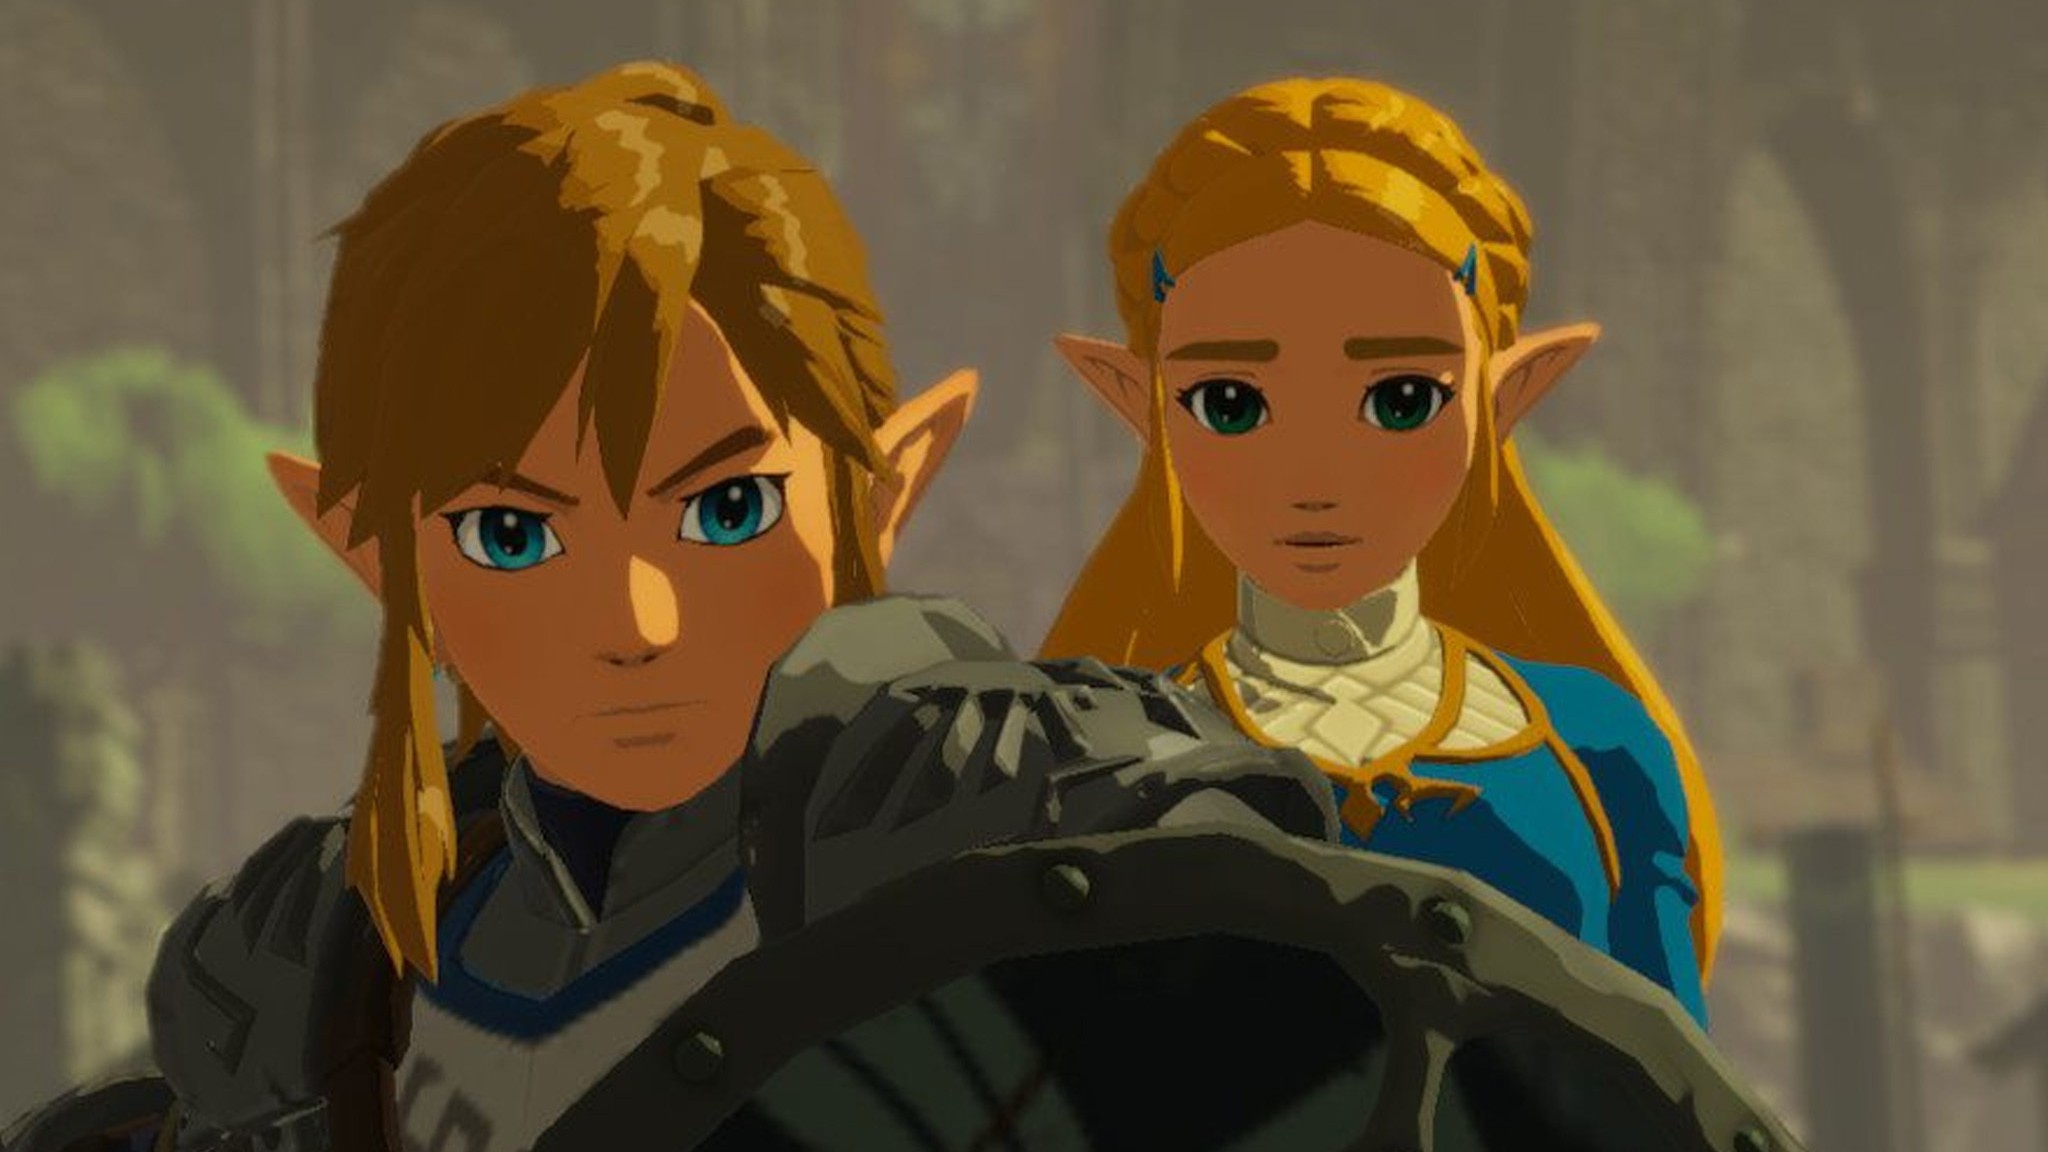 Zelda BOTW 2: Sequel Names Nintendo Definitely Won't Use